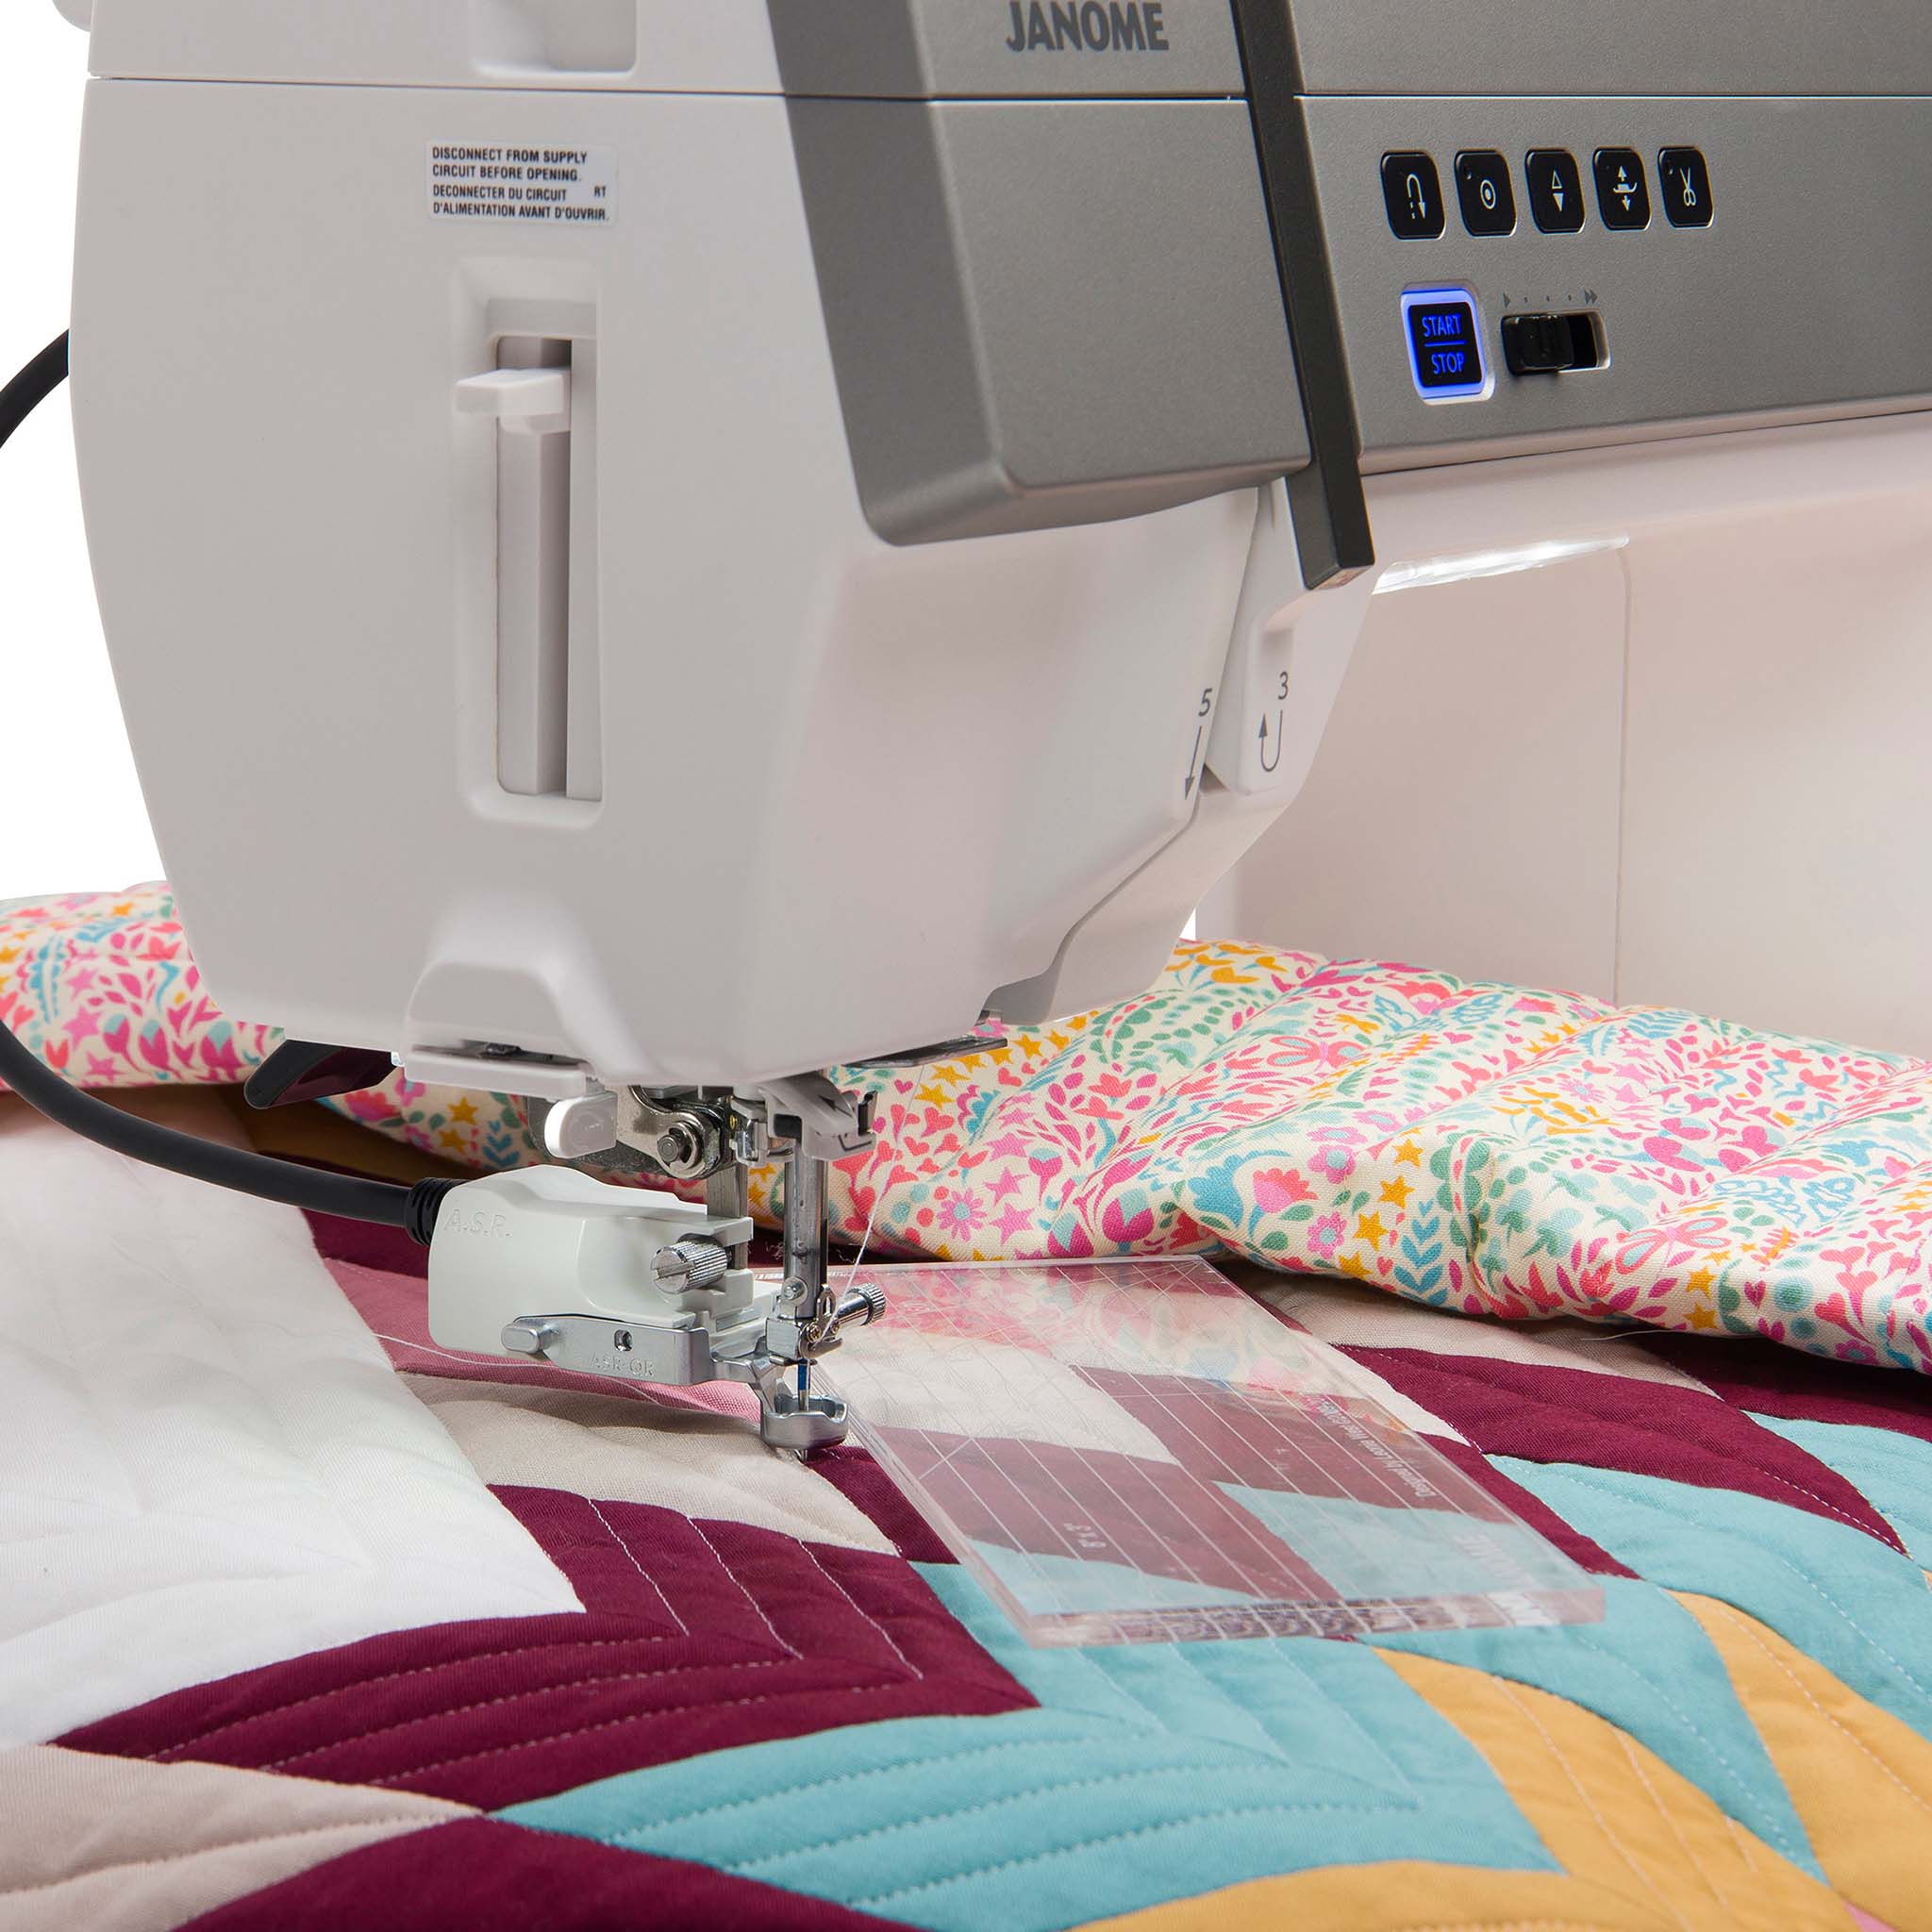 Janome Horizon Memory Craft 9480 QC Professional Sewing Quilting